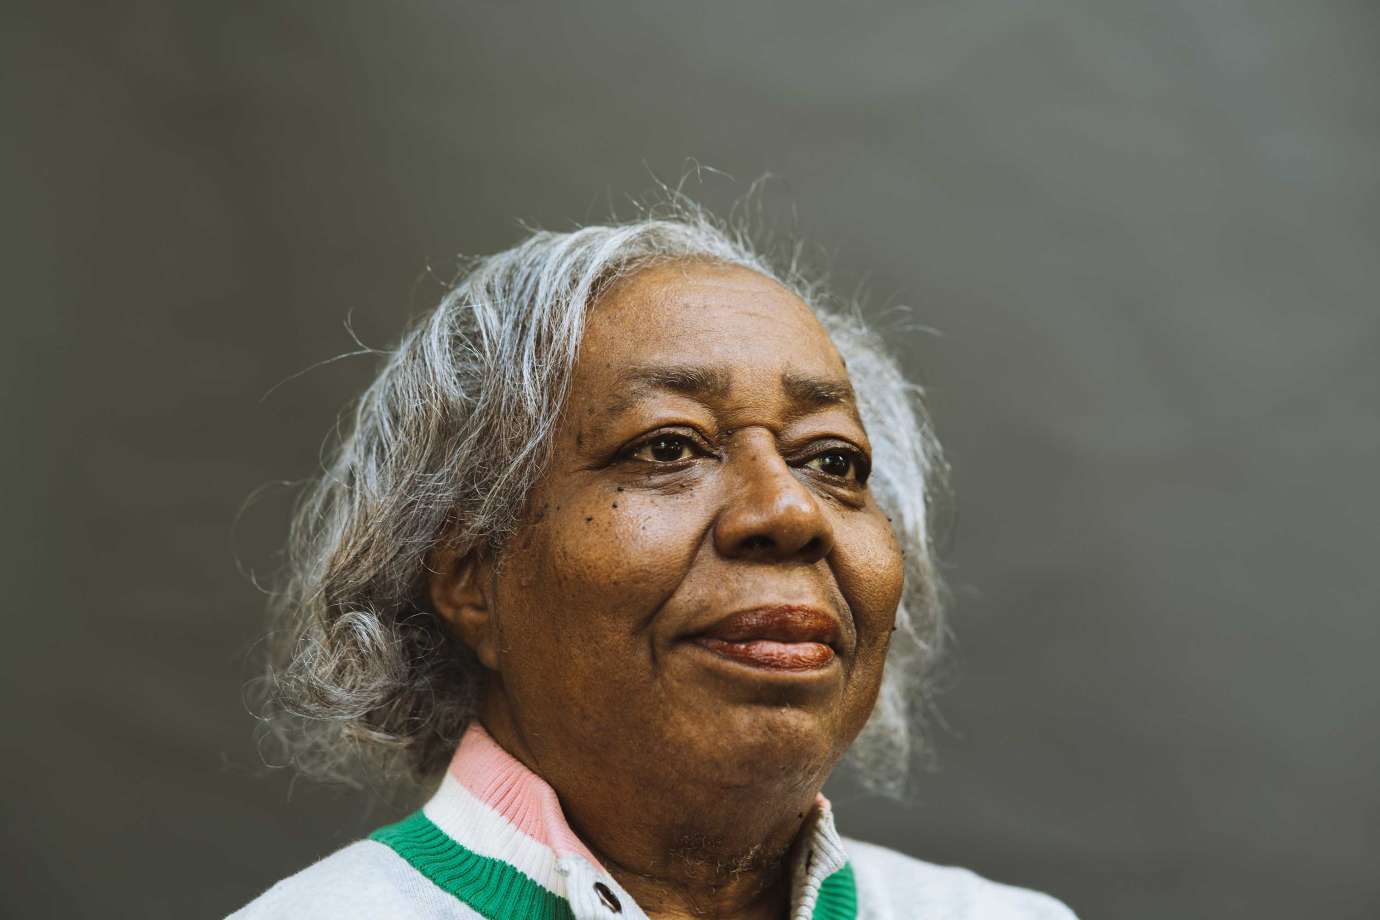 A portrait photograph of Darlene Coleman